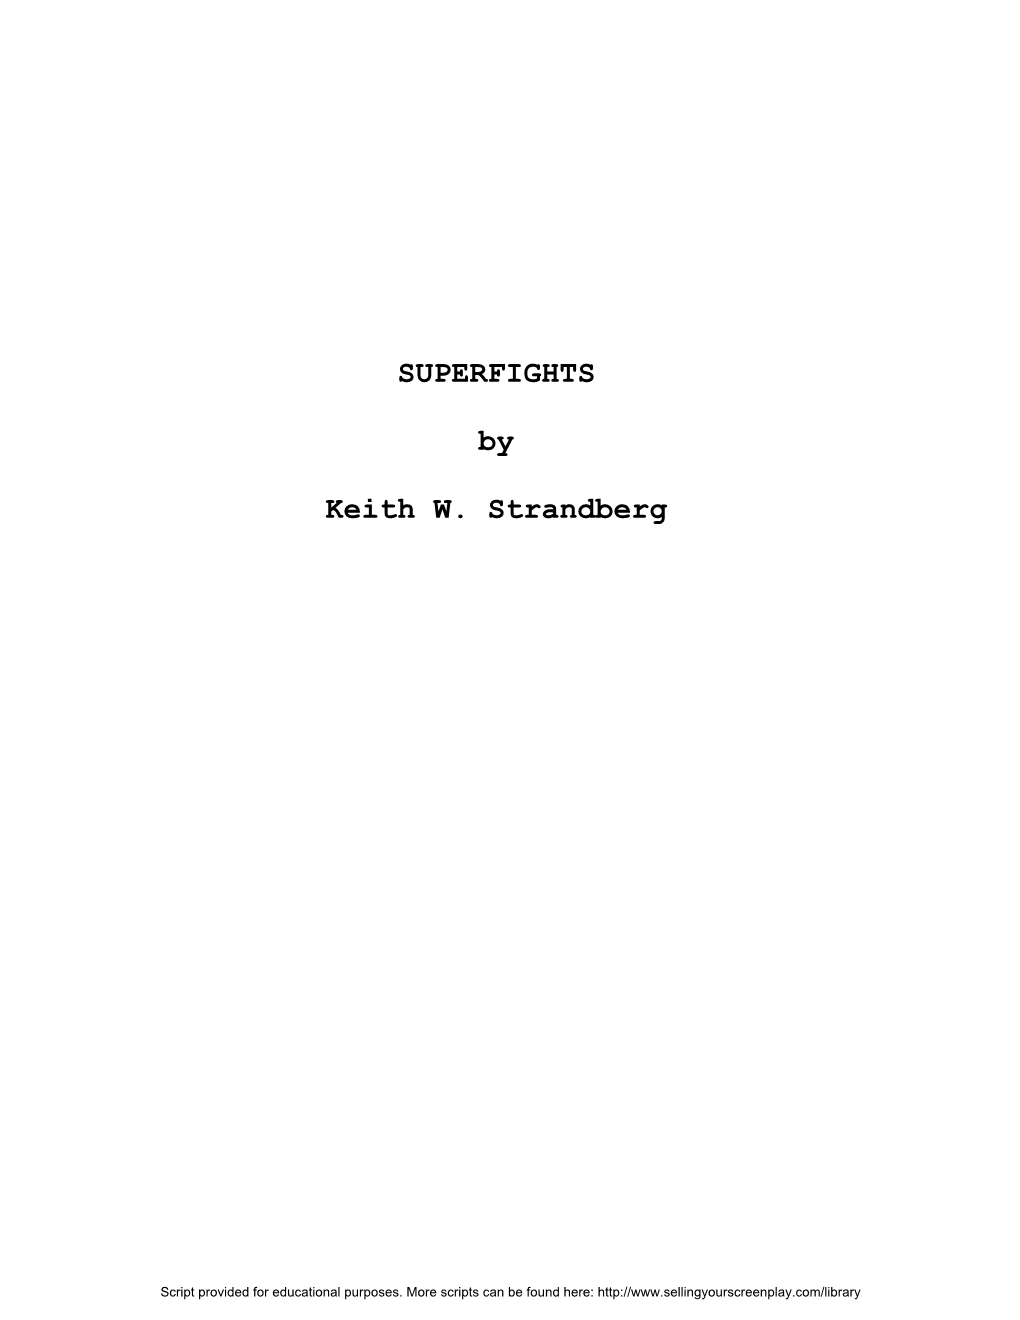 SUPERFIGHTS by Keith W. Strandberg